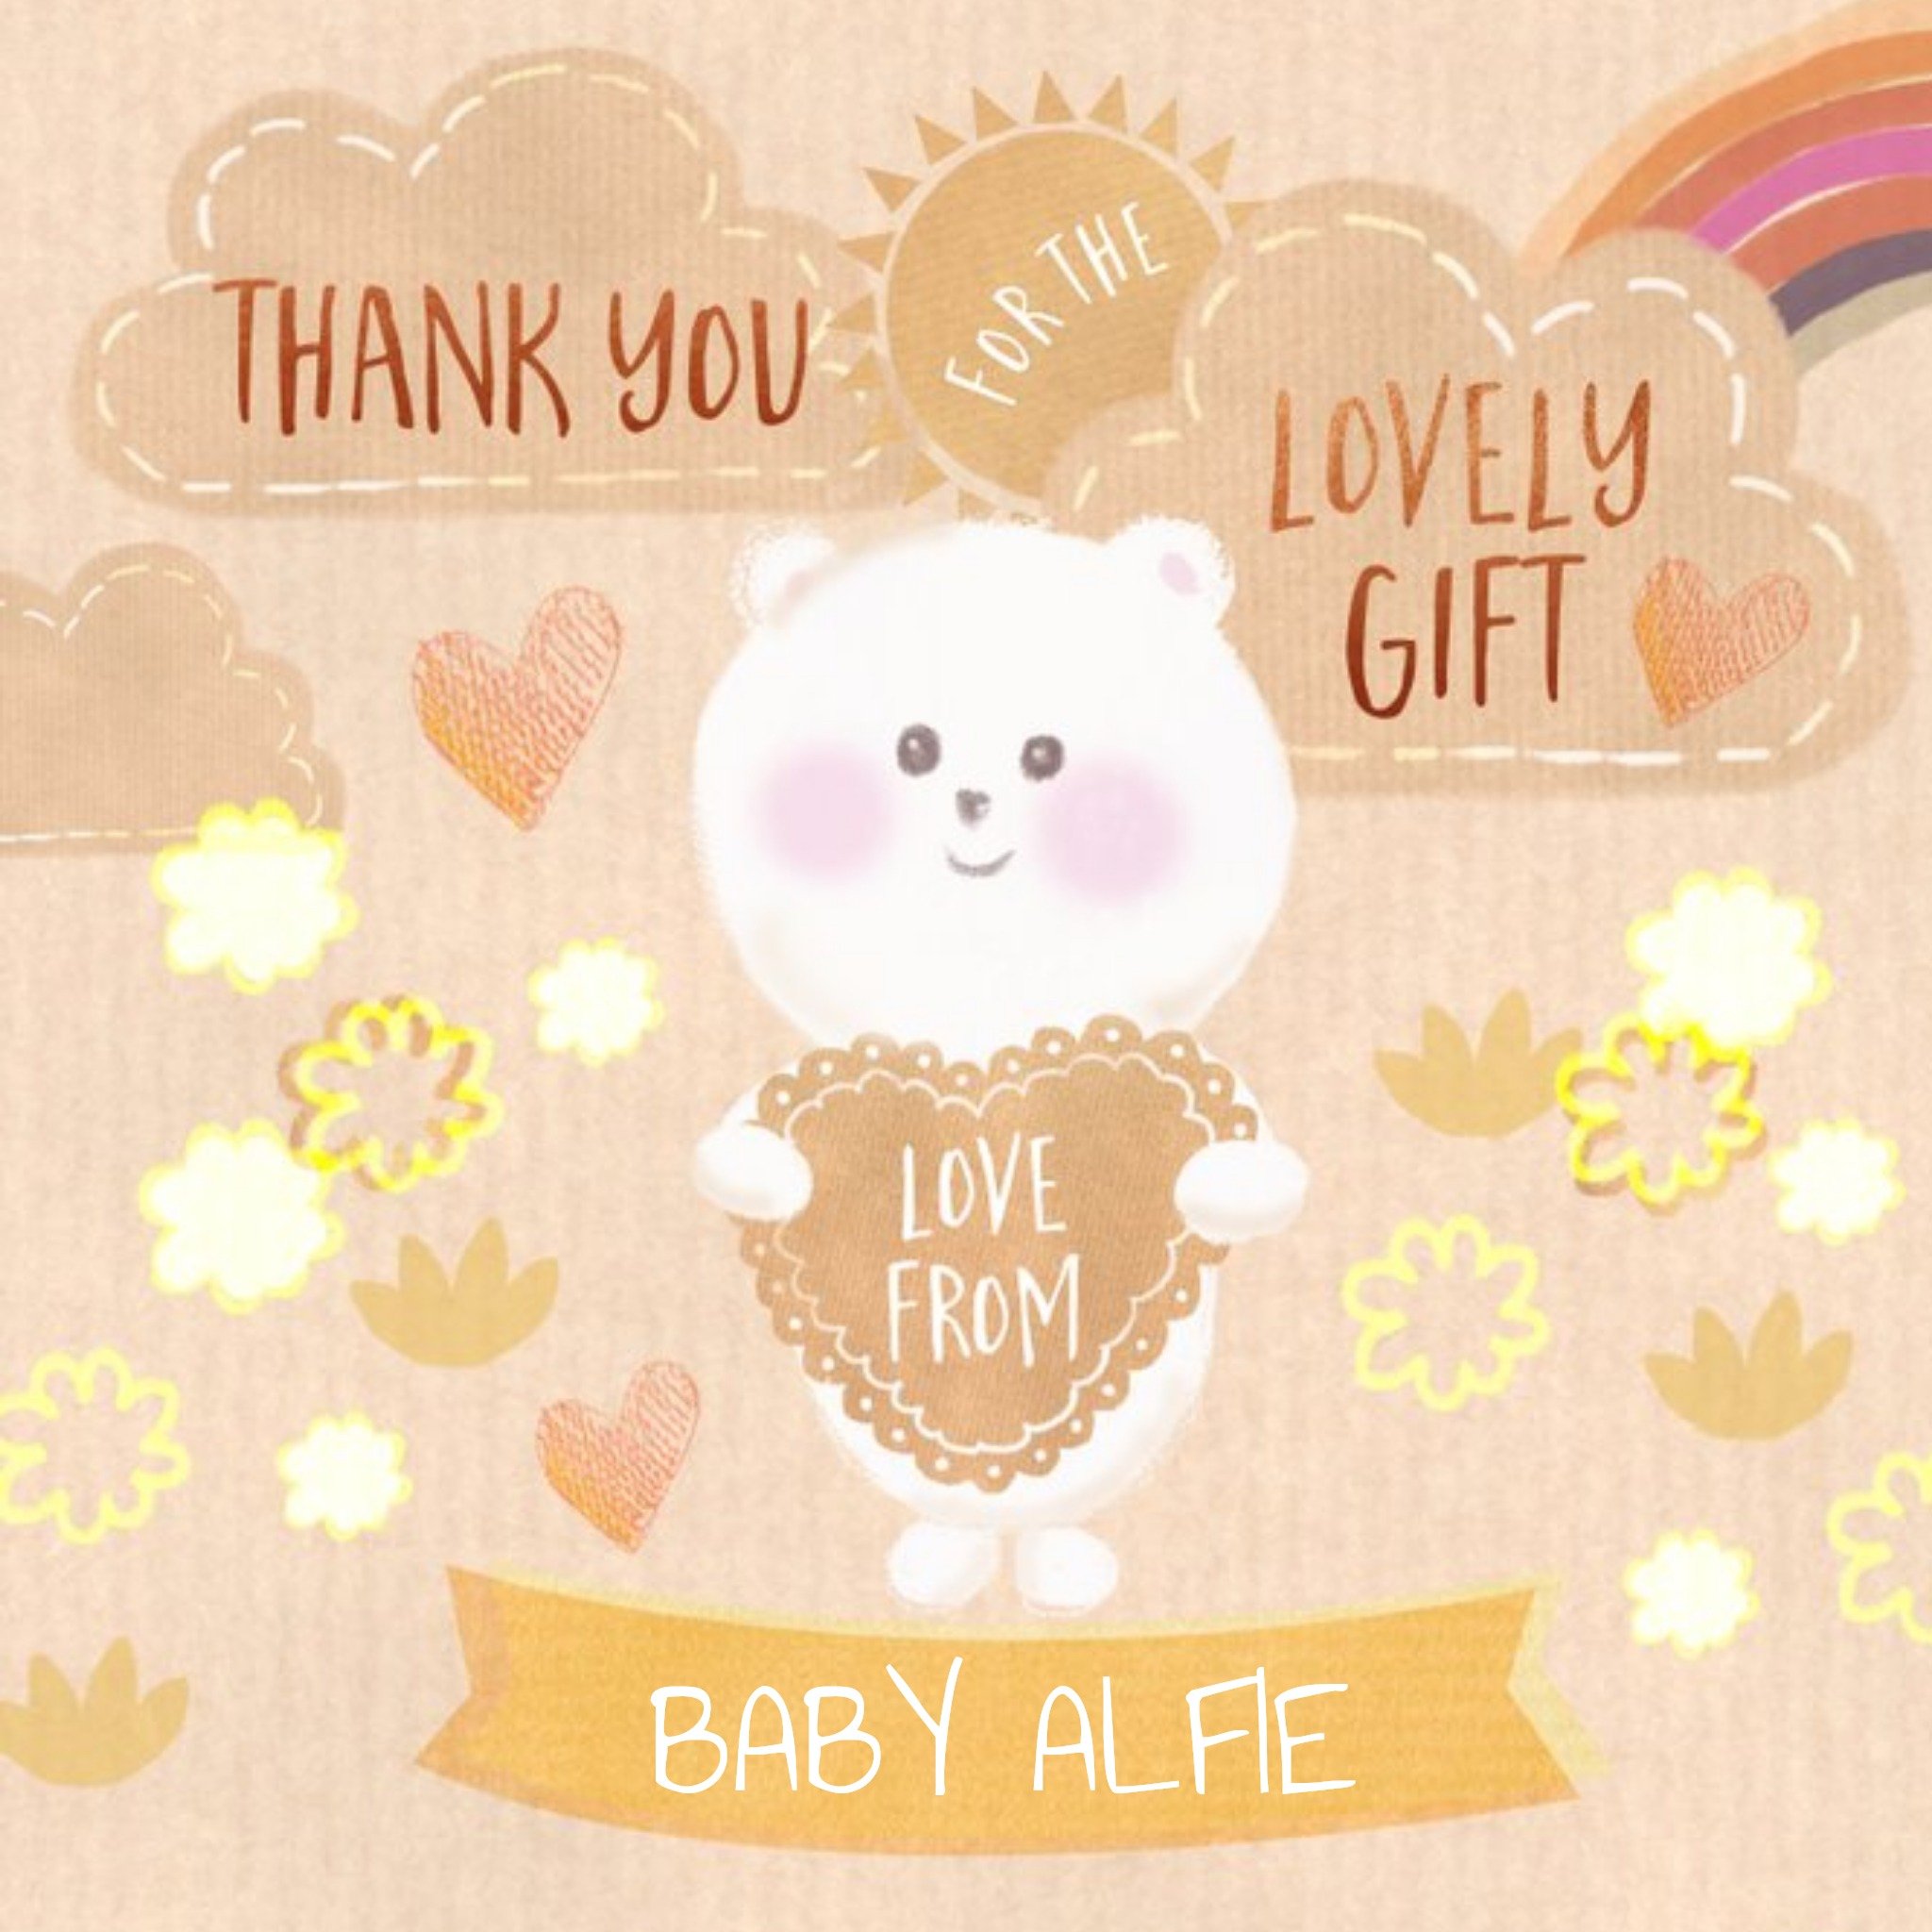 Moonpig Catherine Worsley Cartoon Bear Clouds Sun Rainbow Gift Cute Thank You Card, Large